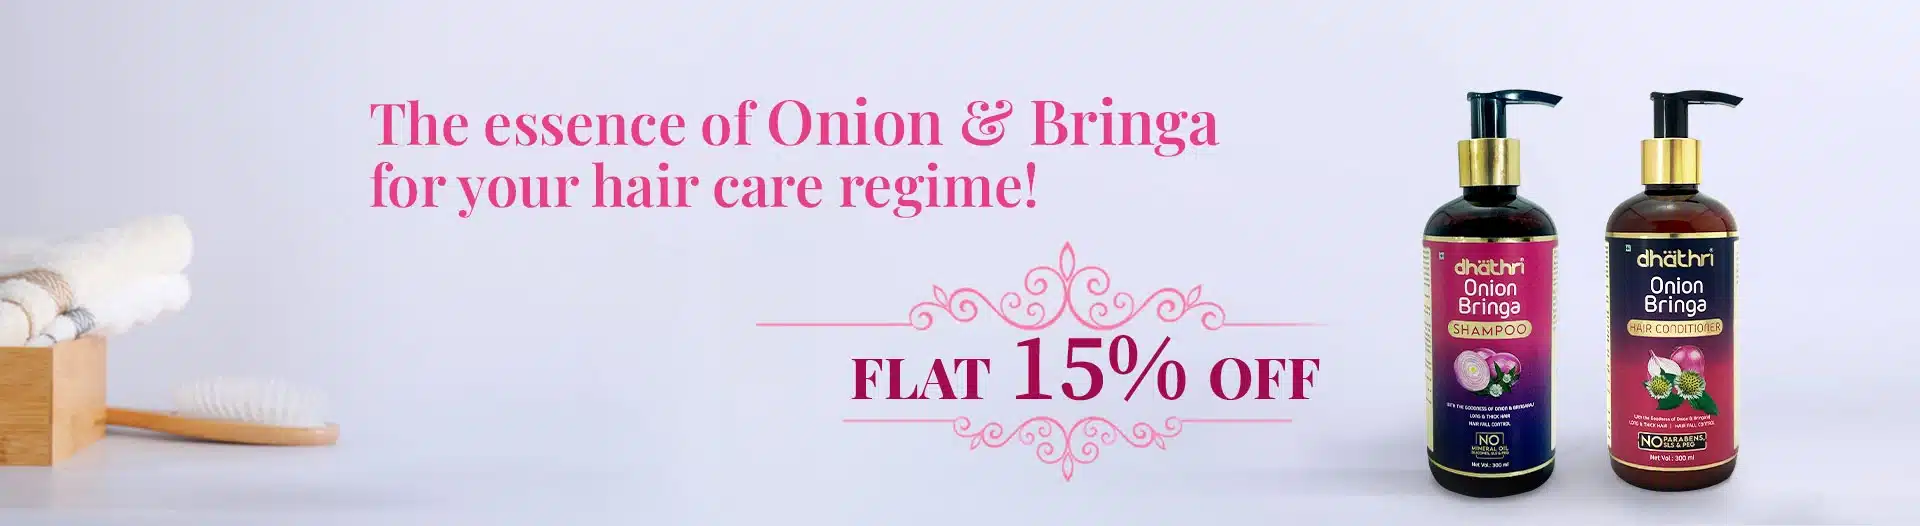 Onion offer